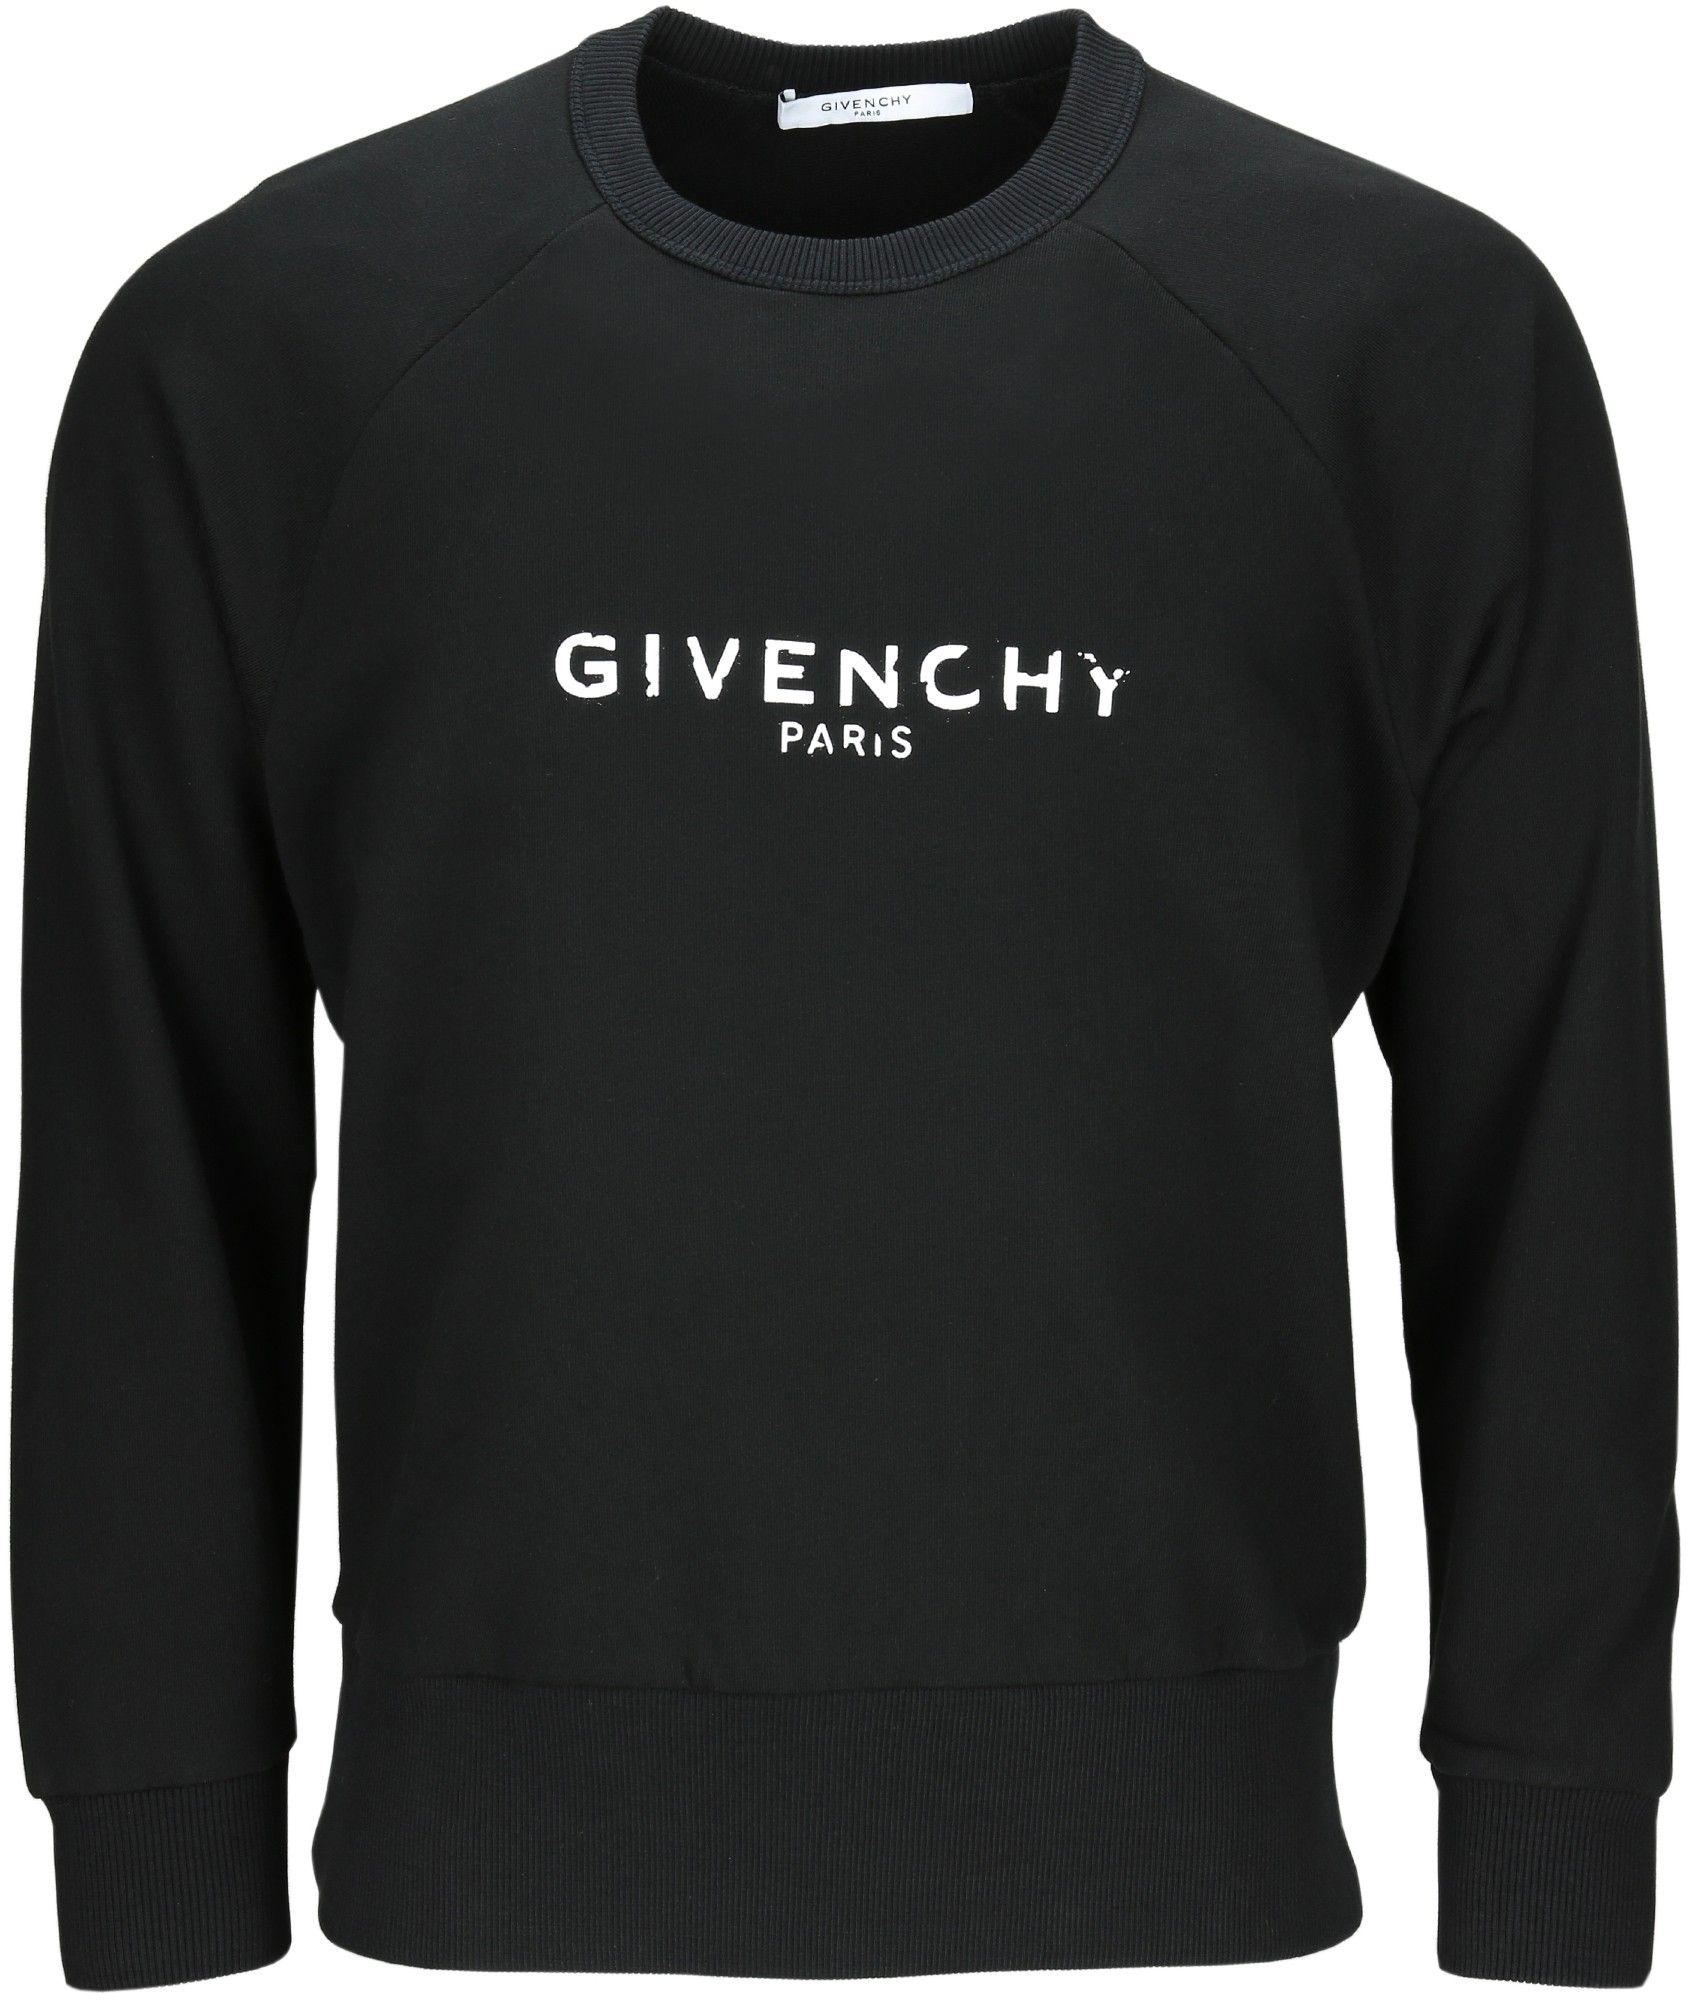 Givenchy Paris Logo - Givenchy Paris Logo Sweatshirt